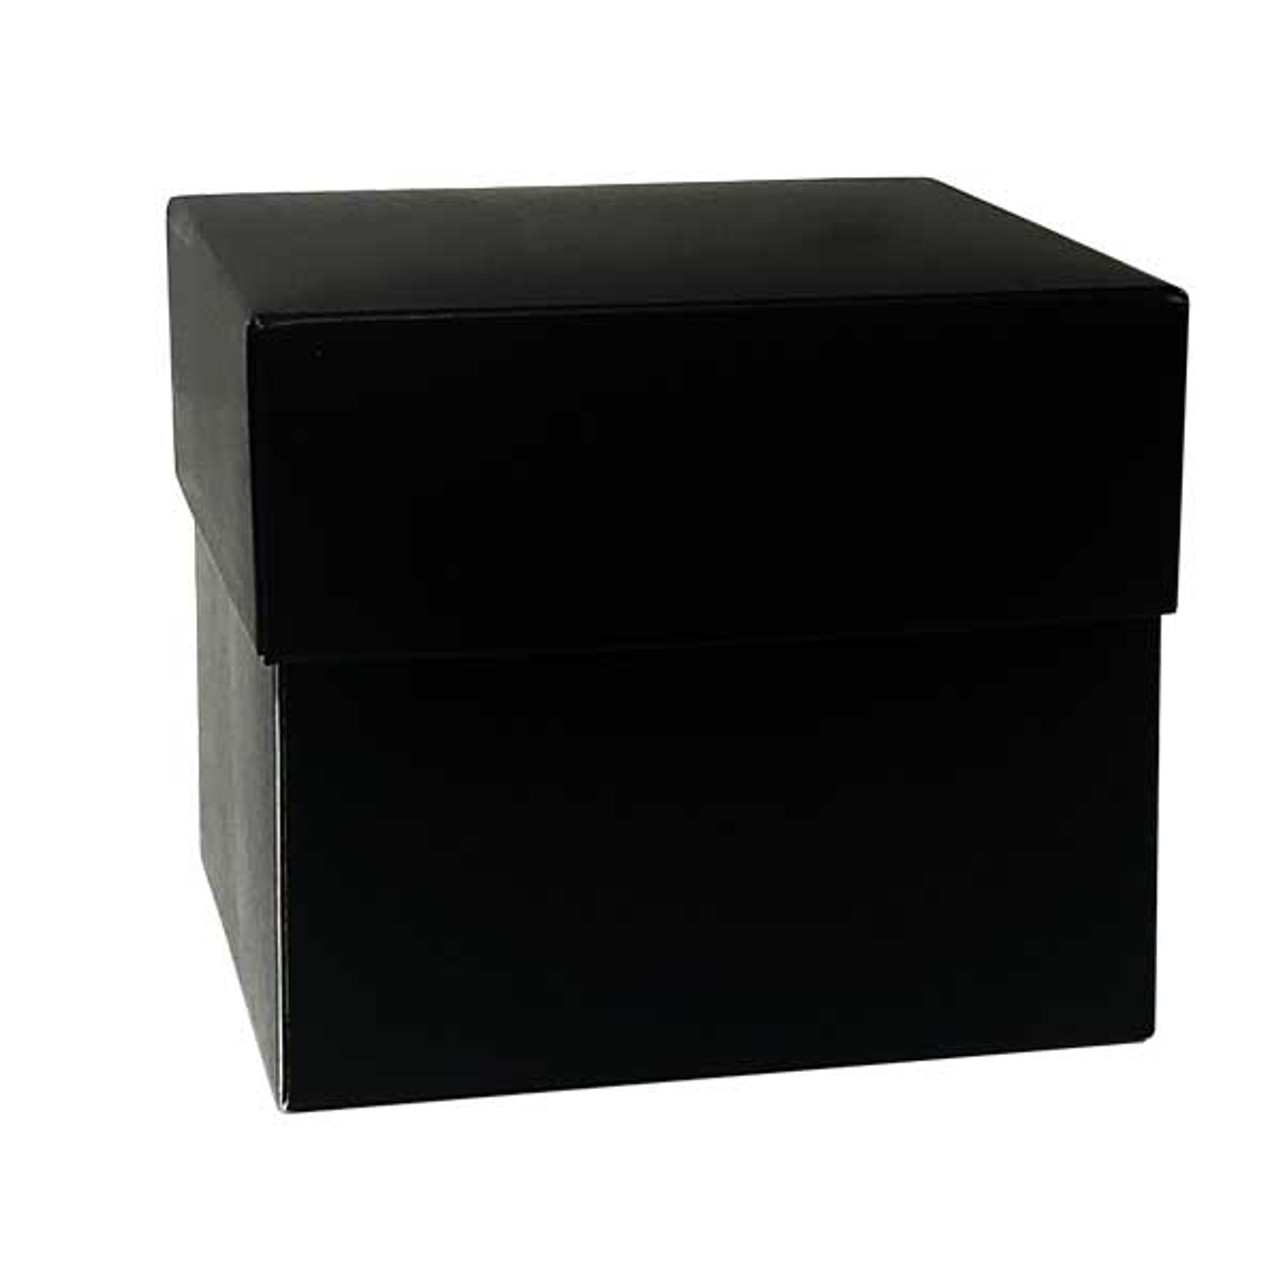 8"x8"x5" Deluxe Gourmet Gift Box-Black